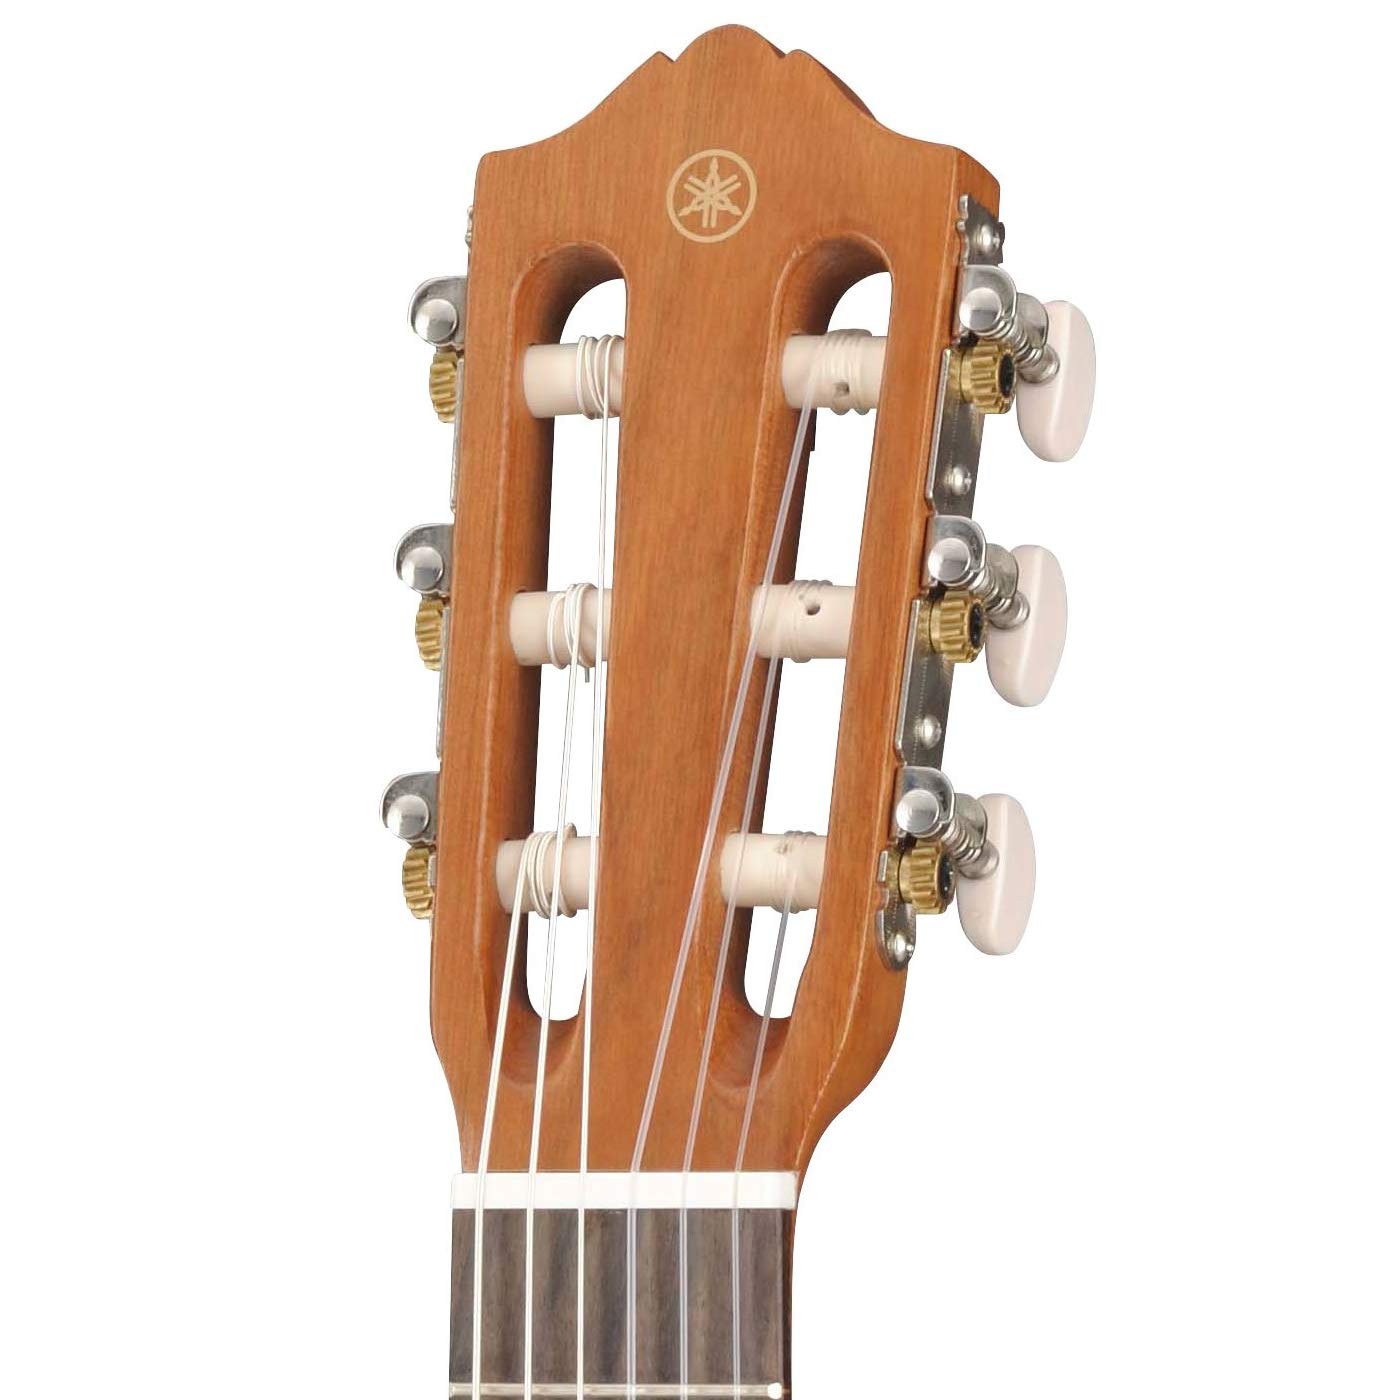 Yamaha Acoustic Guitalele GL-1